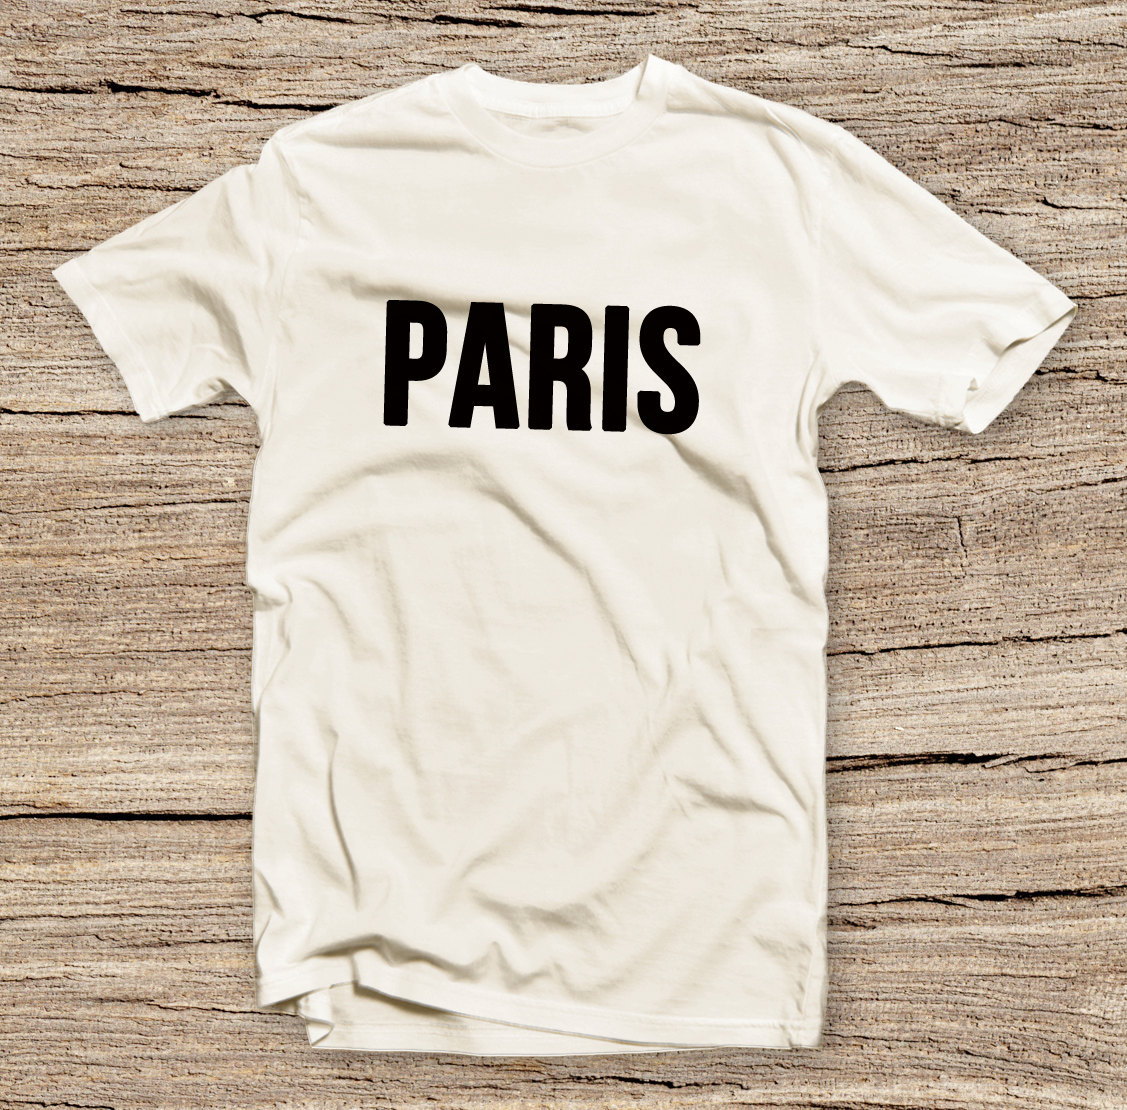 Pts-081 Paris Tee, Mens Womans T-shirt, Fashion Style Printed T-shirt